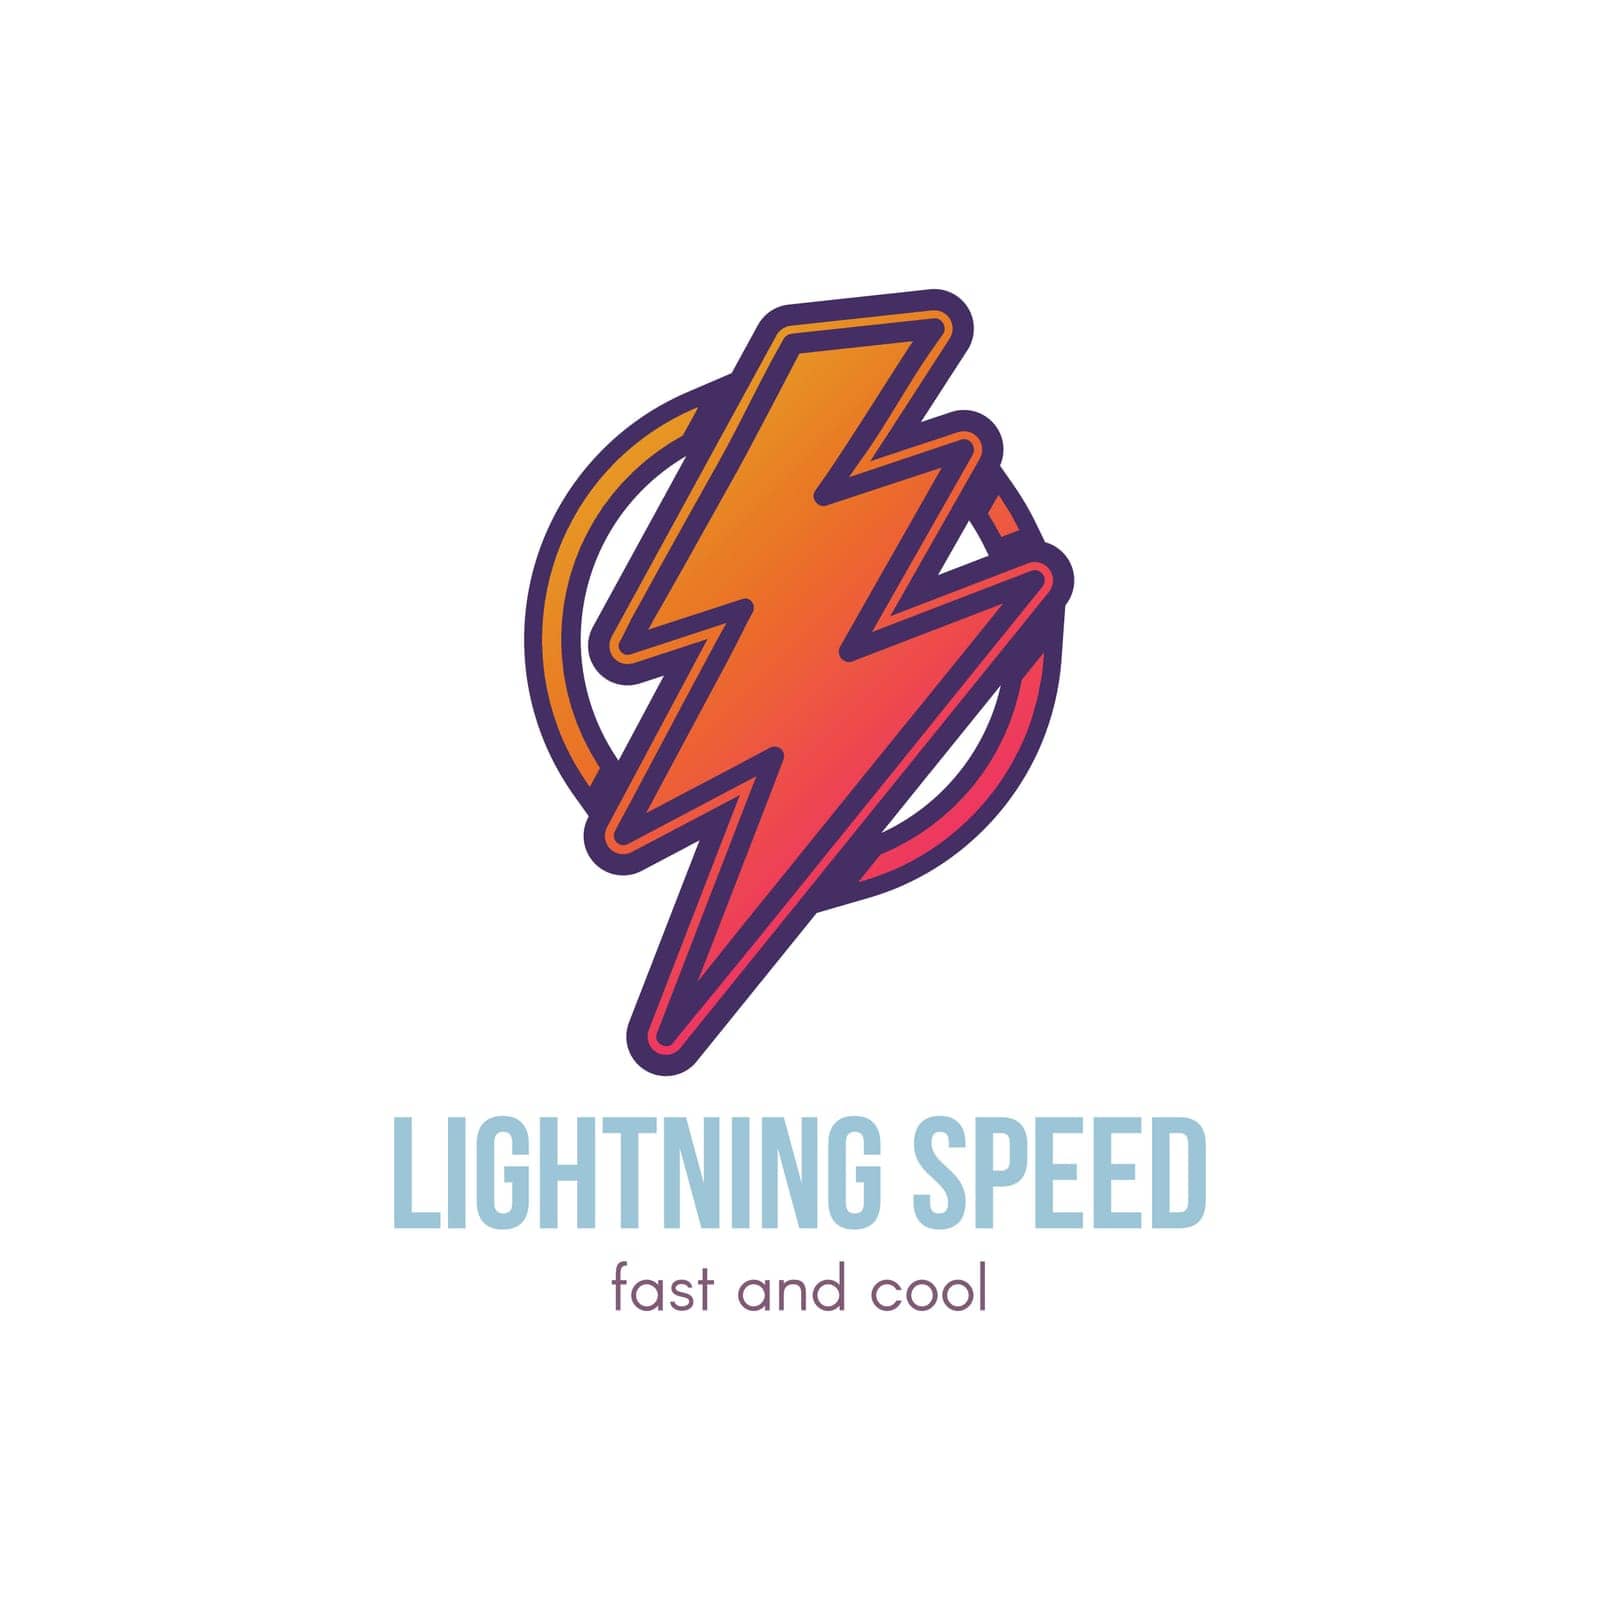 Thunder cartoon color icon. Lightning bolt in circle. Speed, energy hand drawn logo design